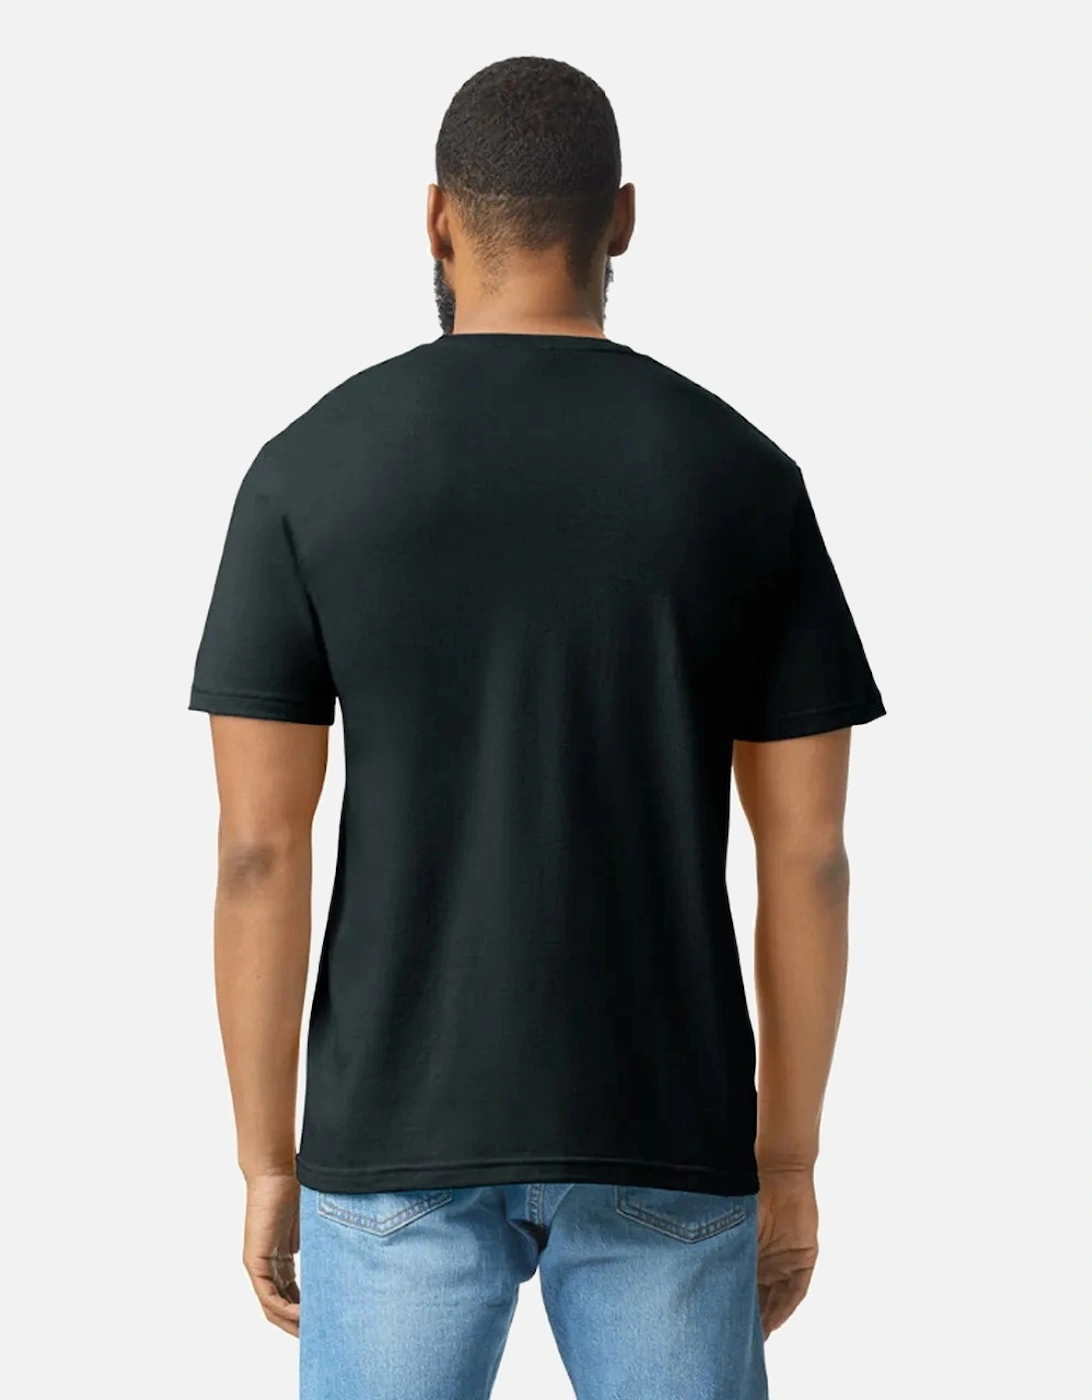 Unisex Adult CVC T-Shirt